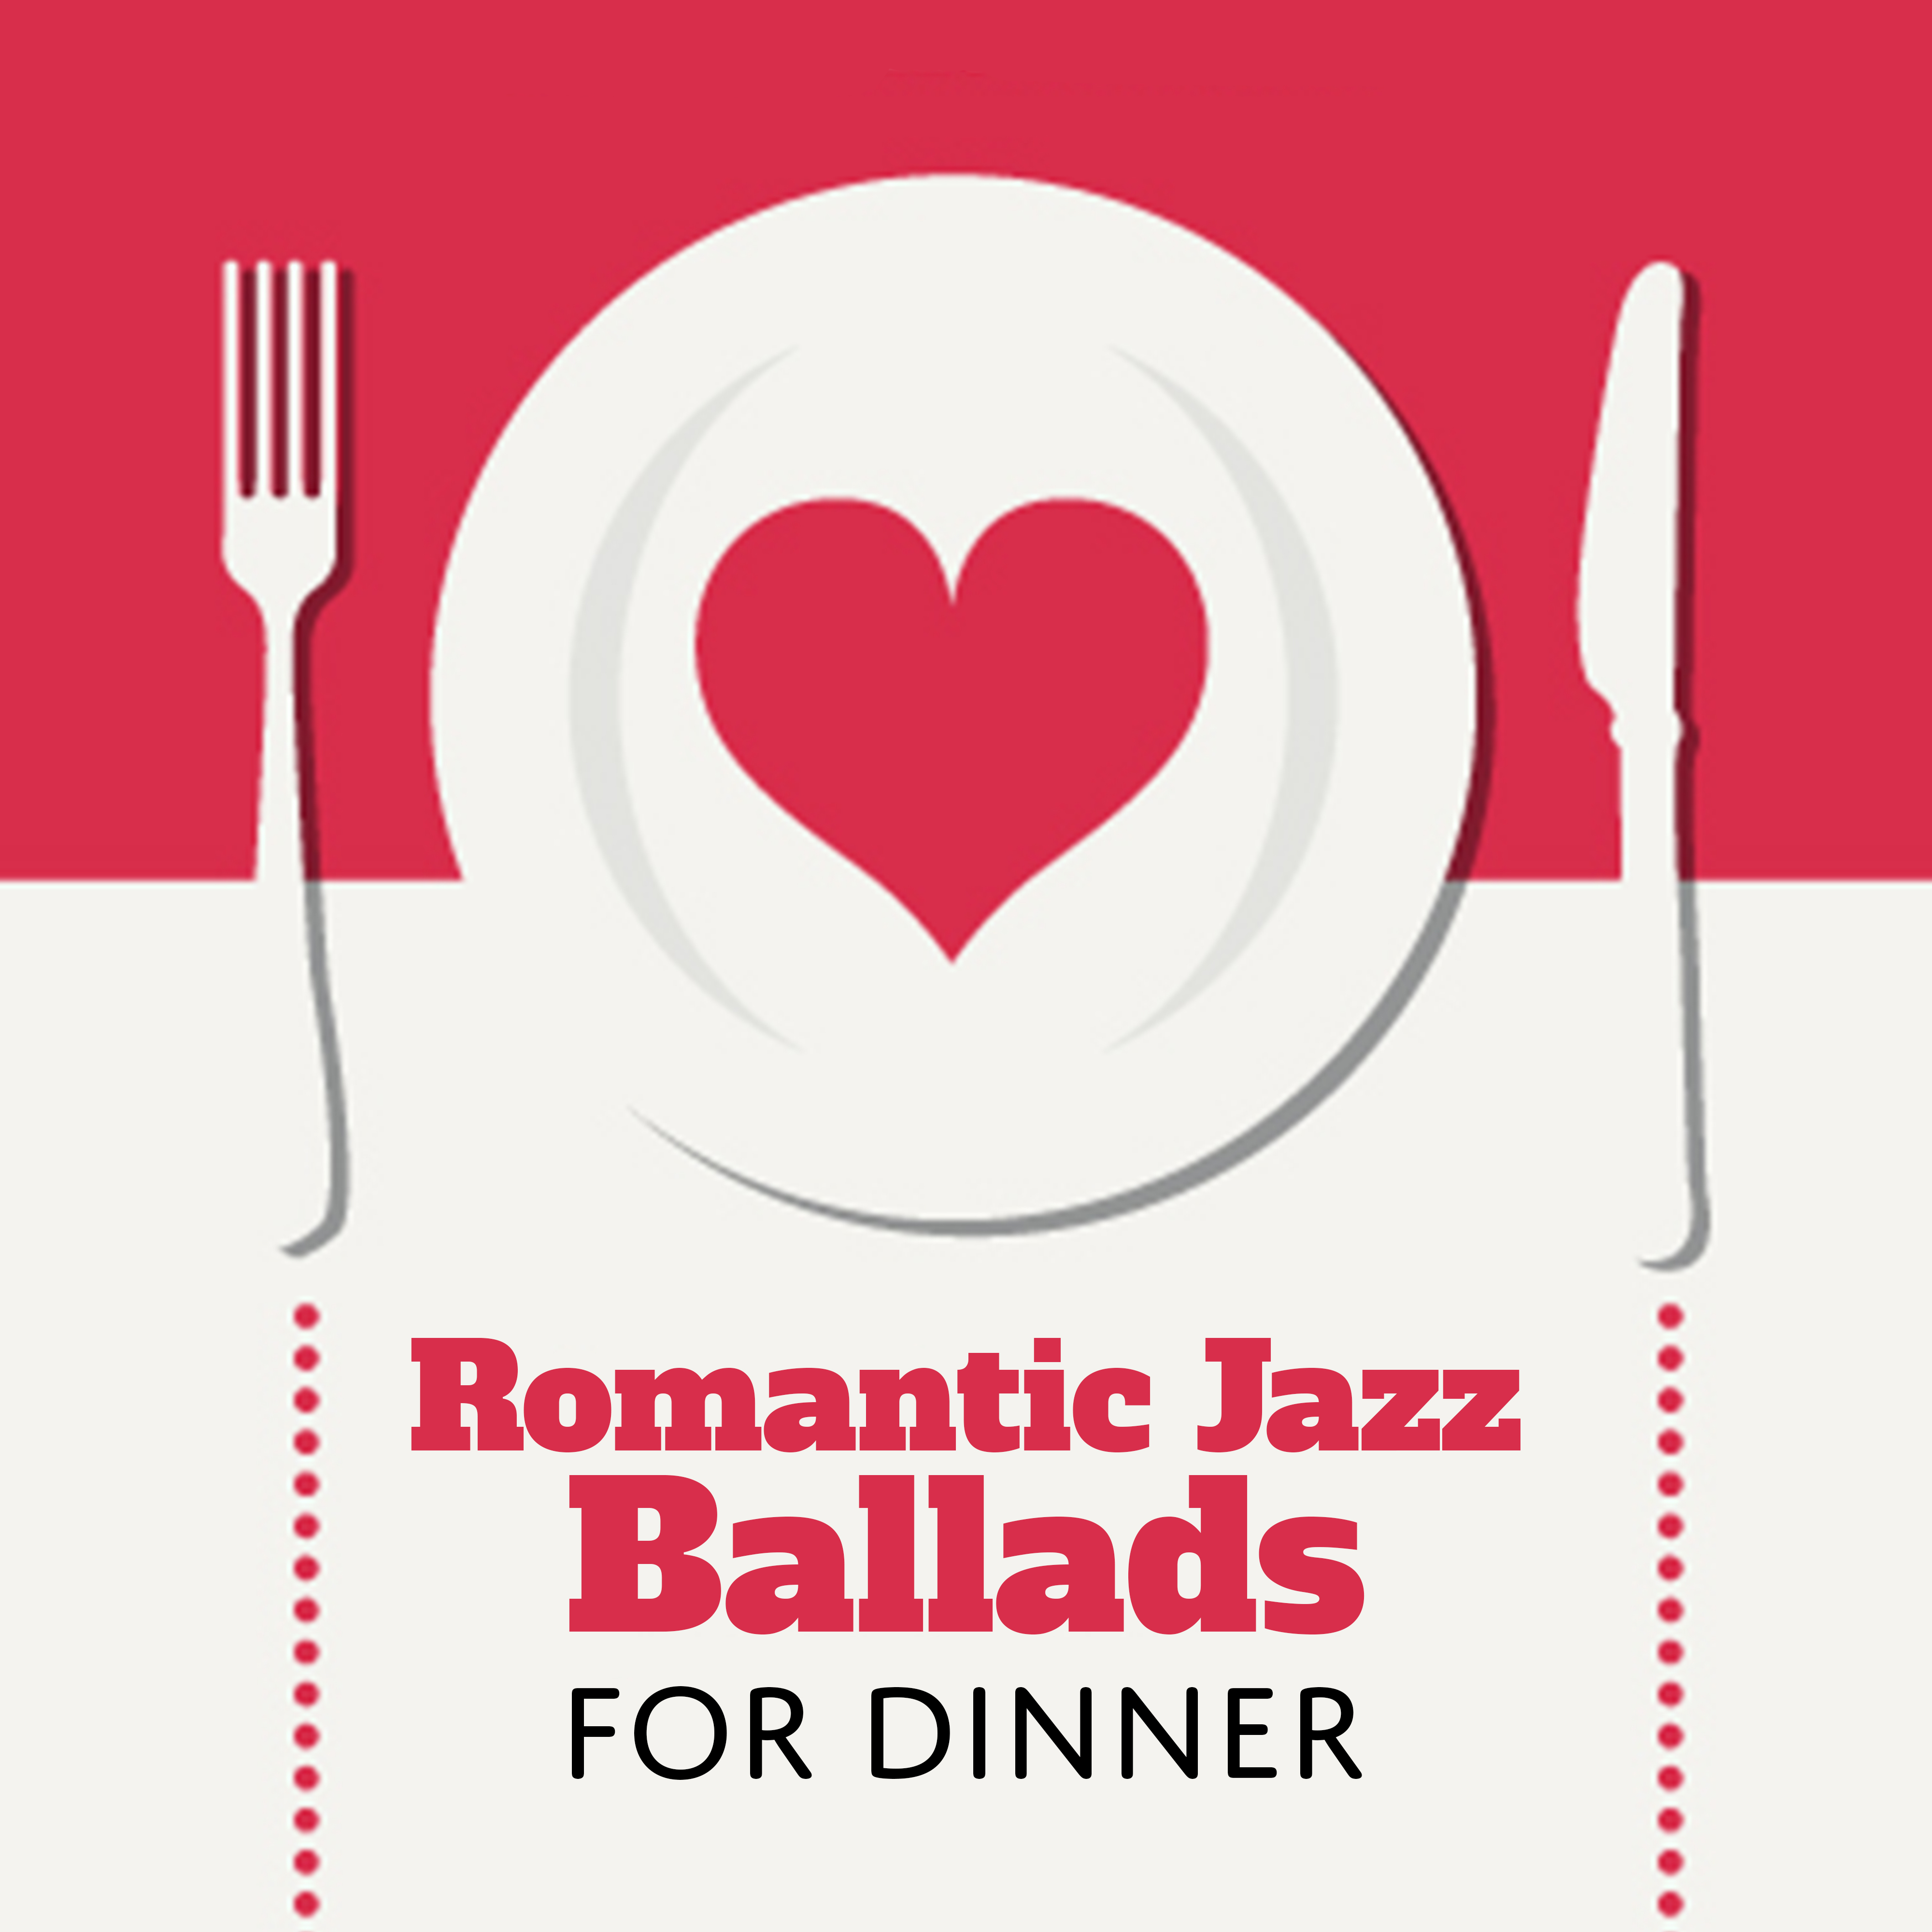 Romantic Jazz Ballads for Dinner